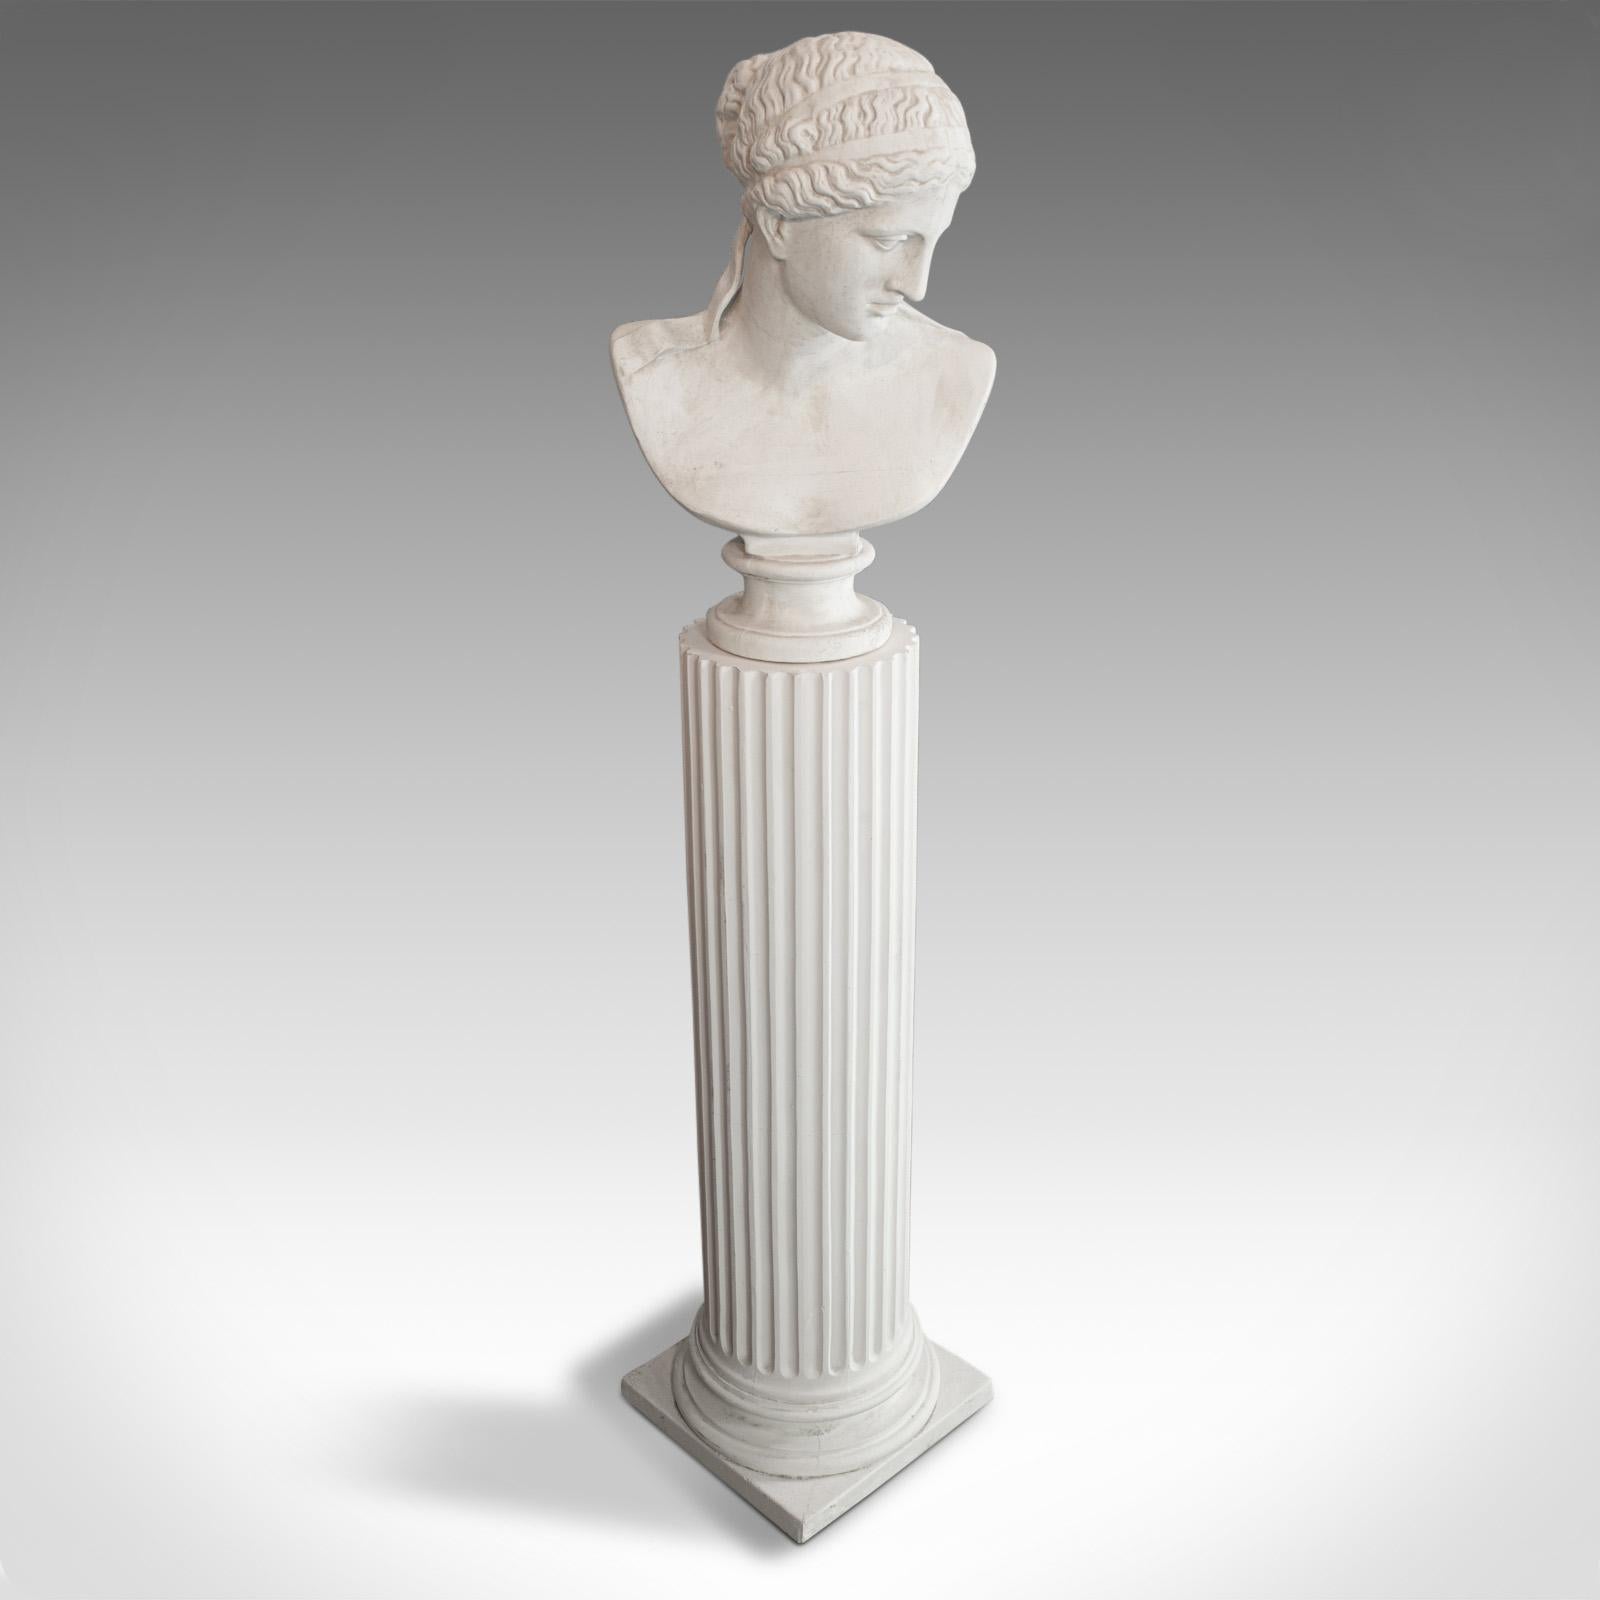 20th Century Vintage Bust on Pedestal, English, Plaster, Female Portrait, Doric Column